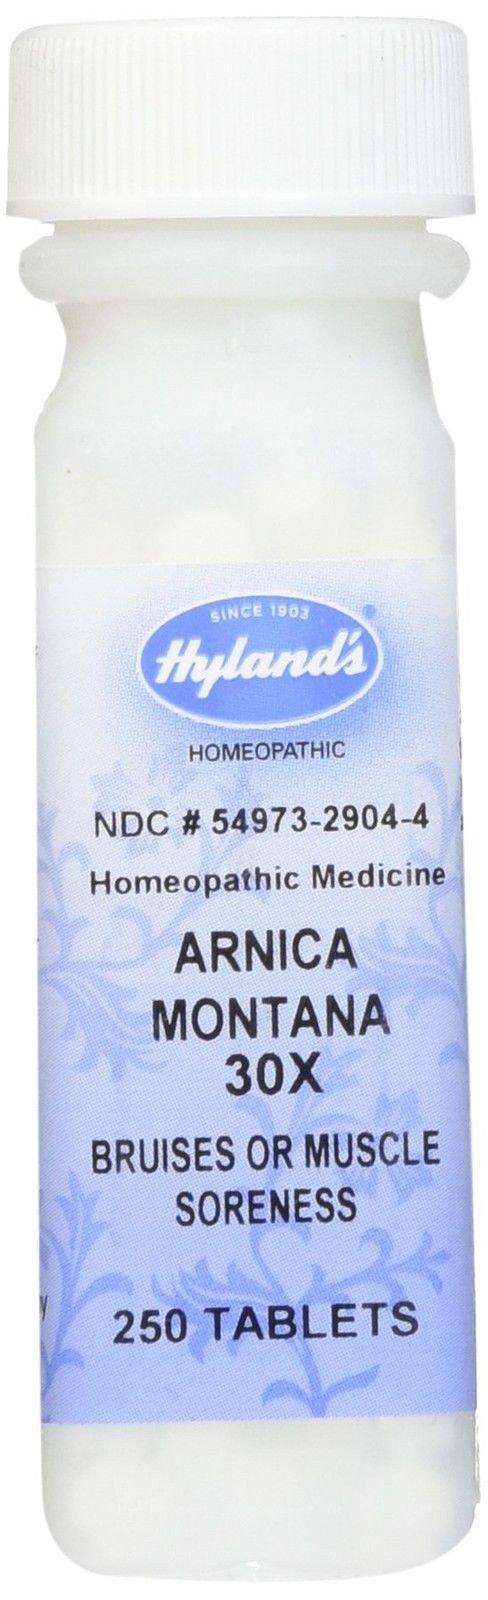 Arnica Montana 30X (Bruises & Muscle Soreness) Hylands 250 Tabs - $12.95